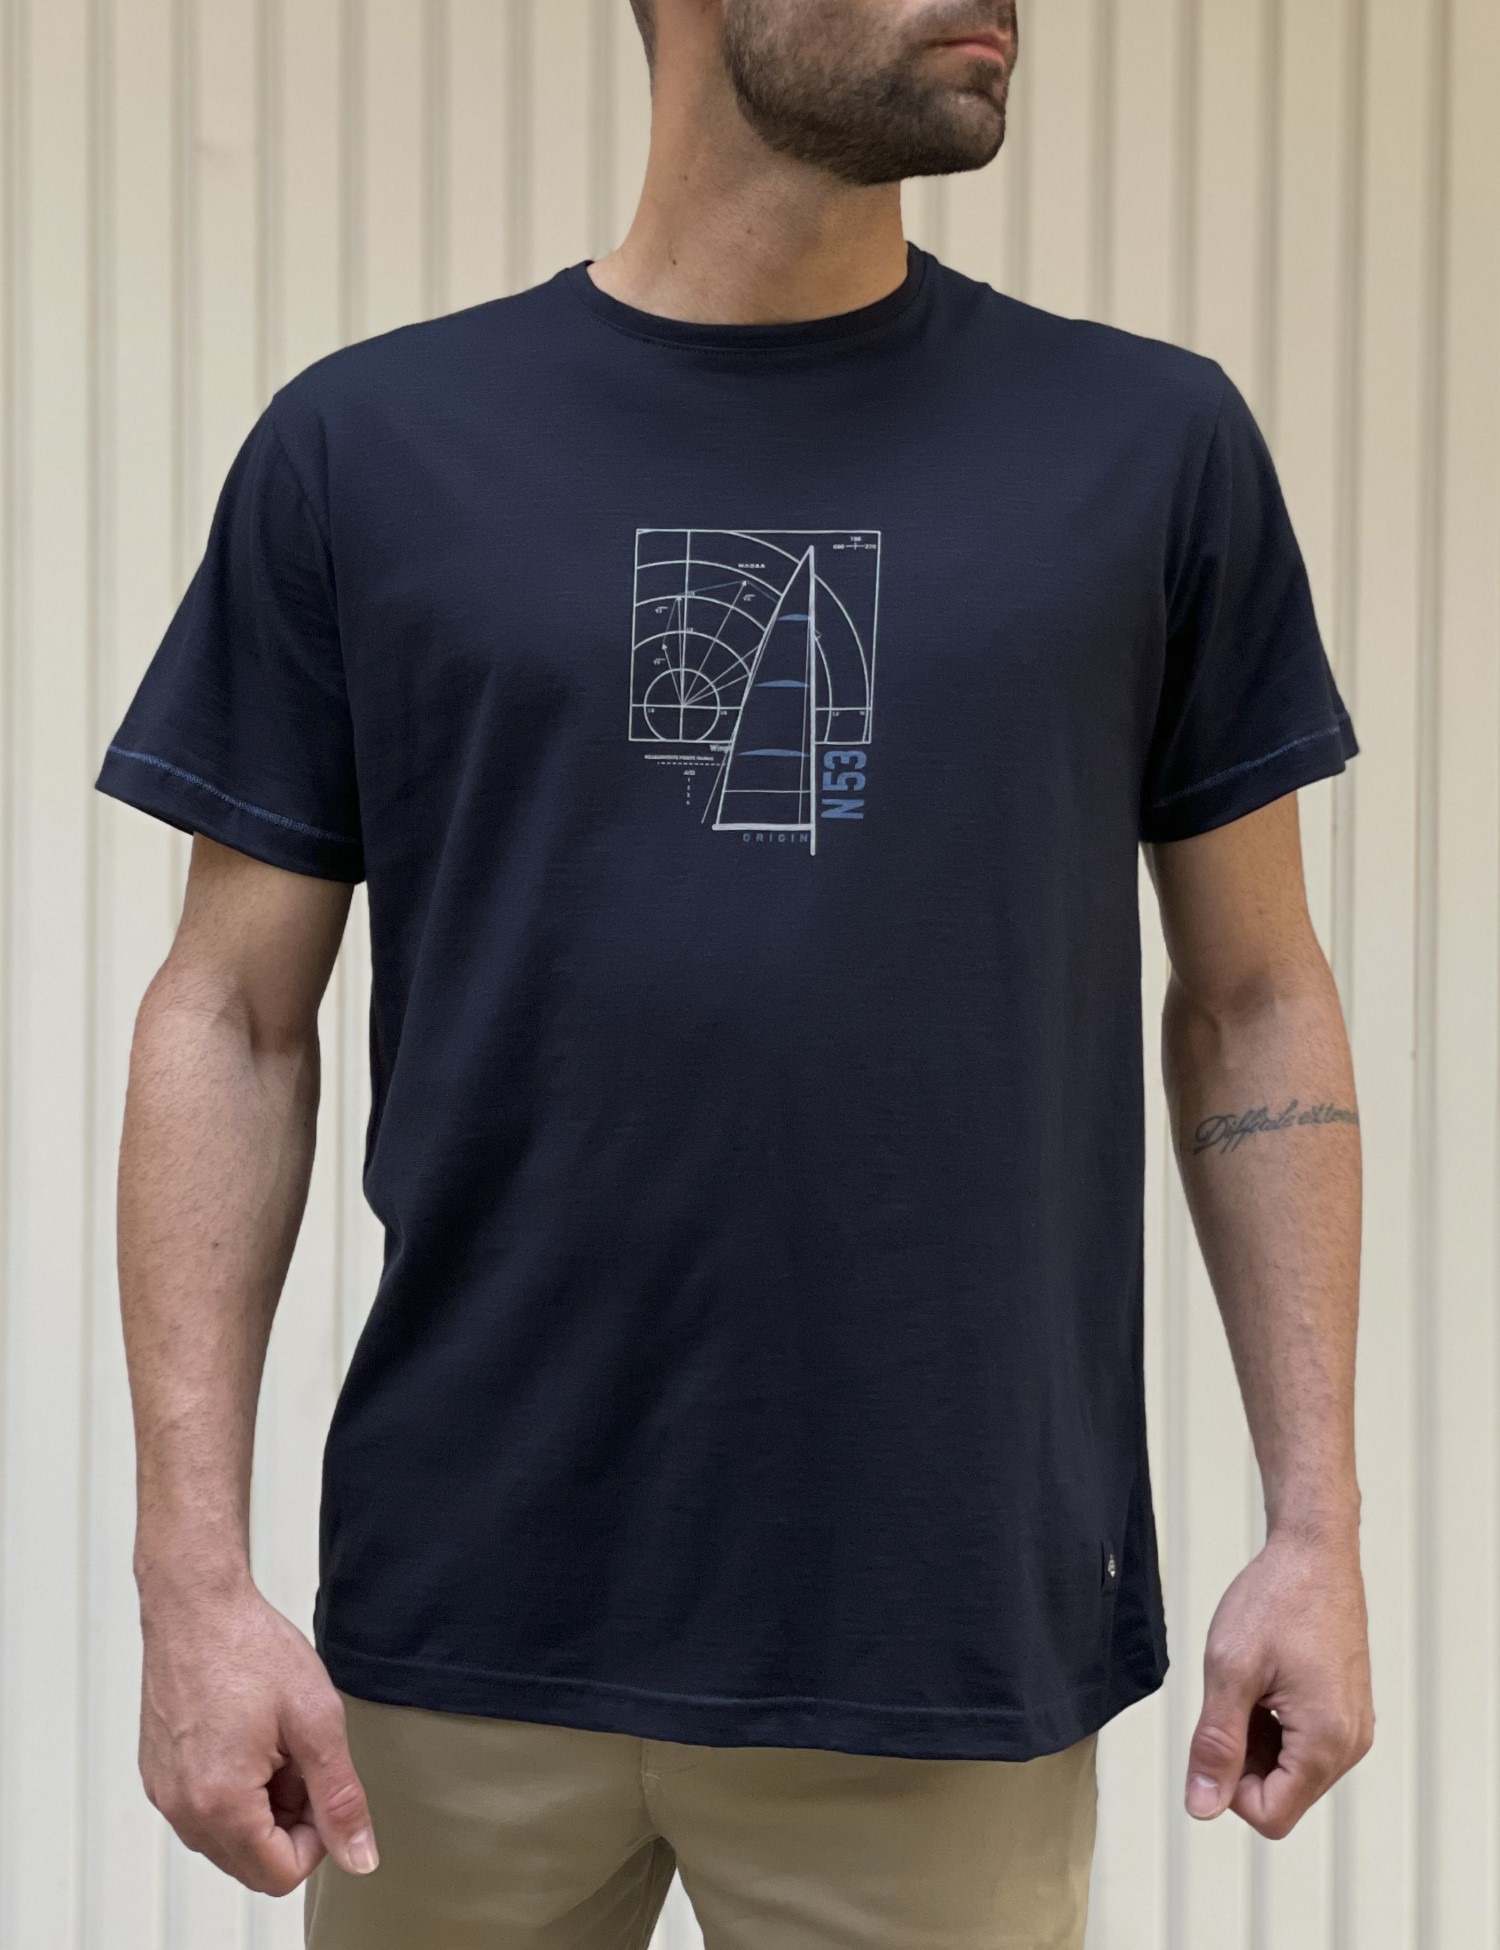 – ORIGIN ανδρικο μπλε βαμβακερο T-shirt με σχεδιο 232710B